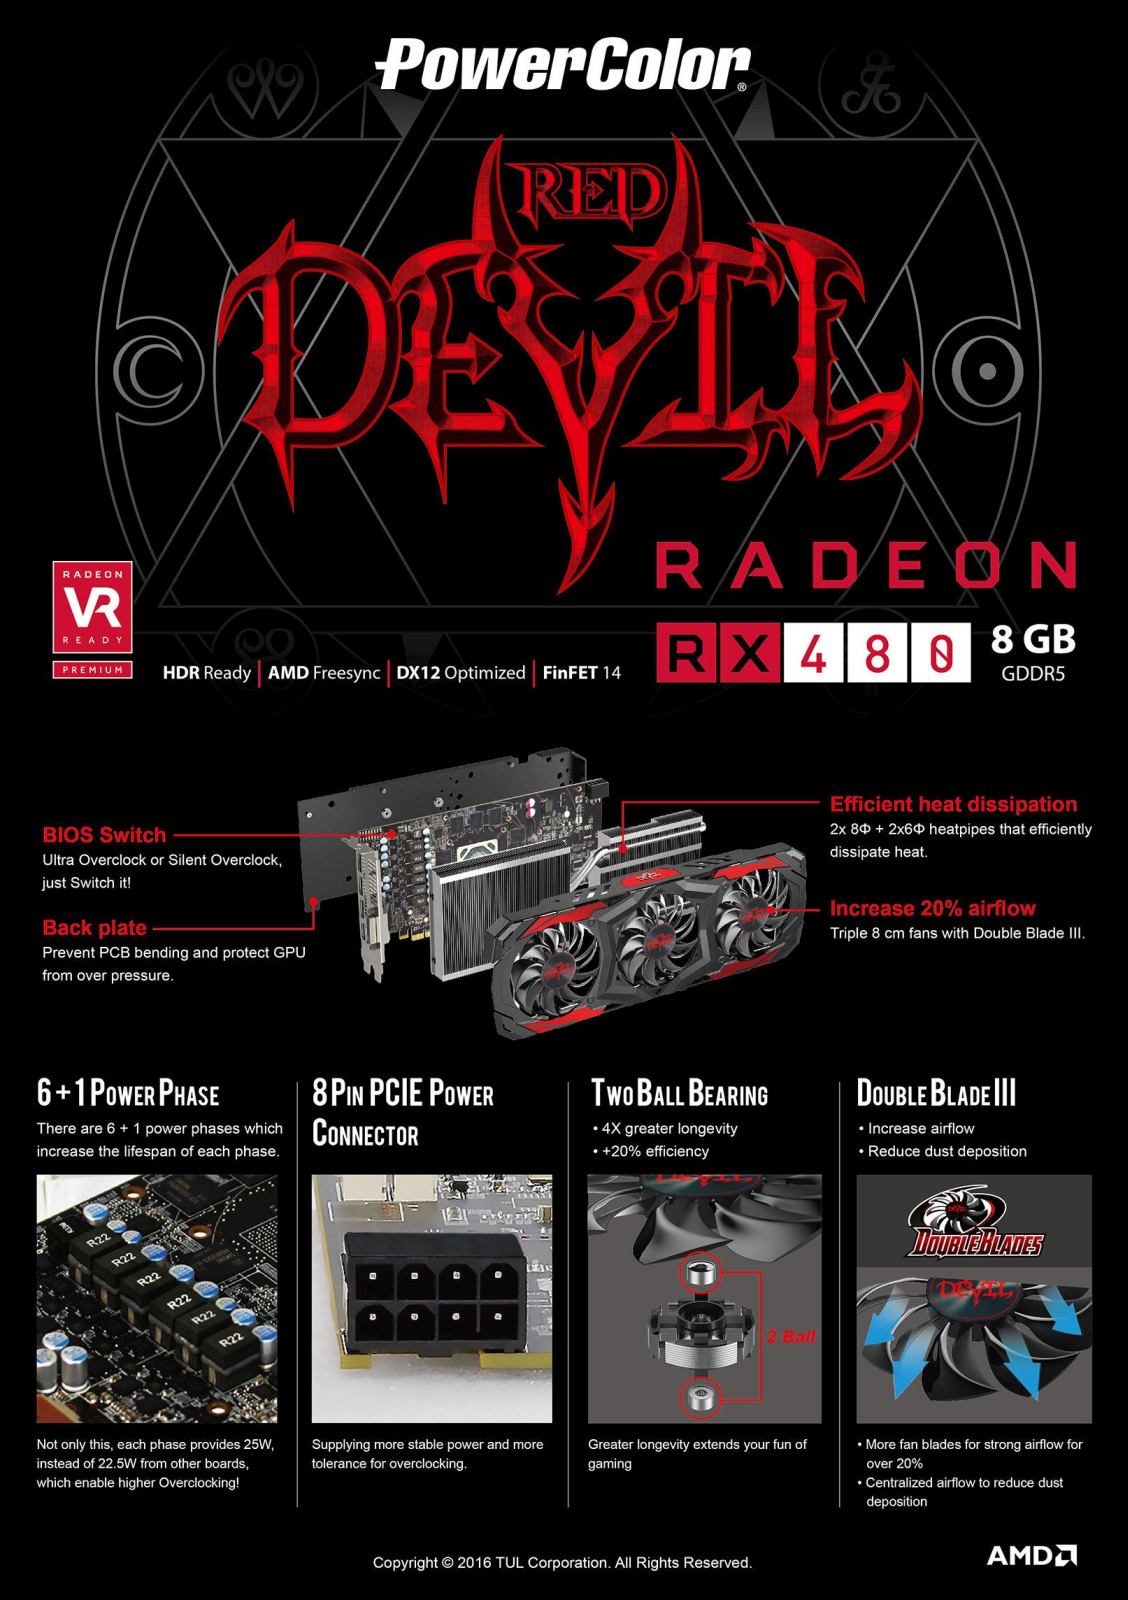 PowerColor RX 480 Red Devil: A NEW Devil is BORN